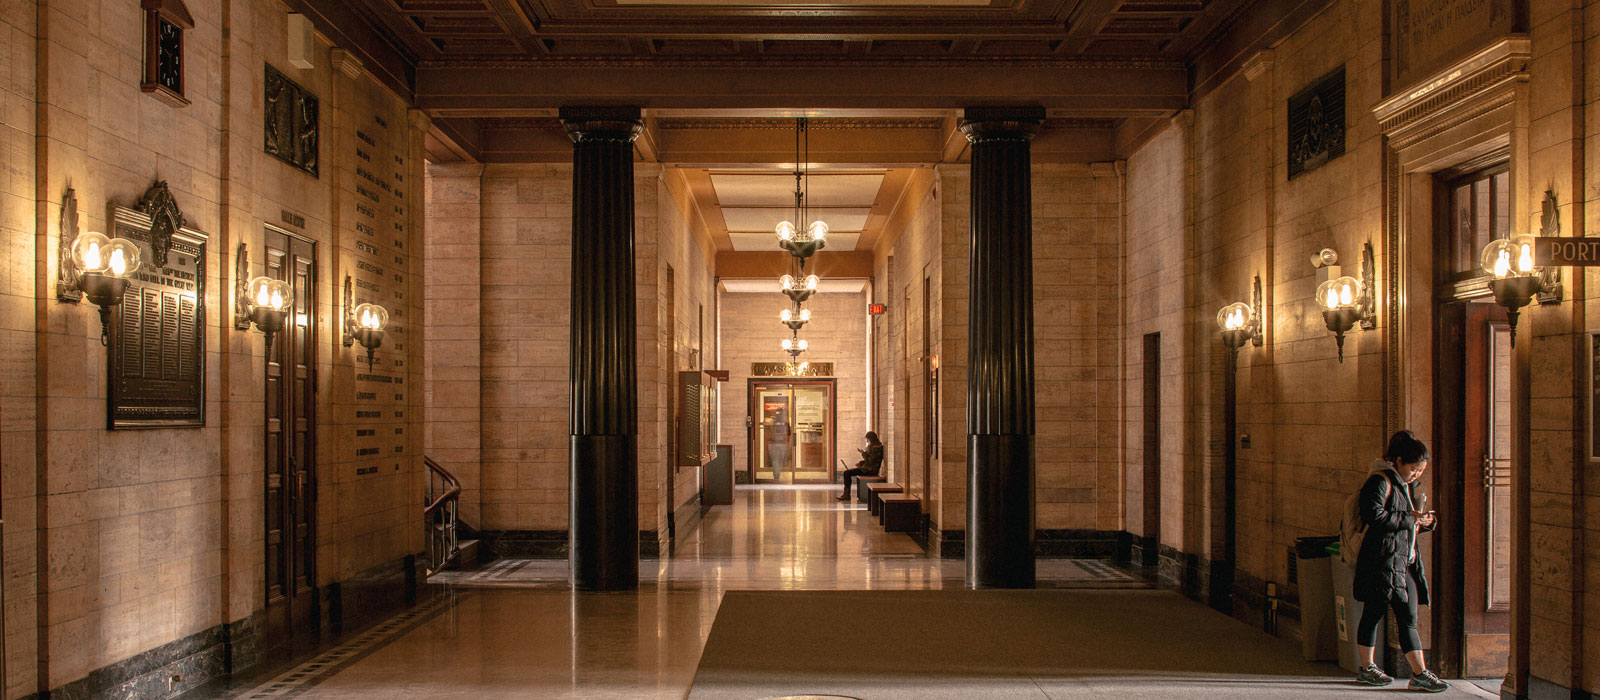 Interior shot of a corridor in a historic campus building.